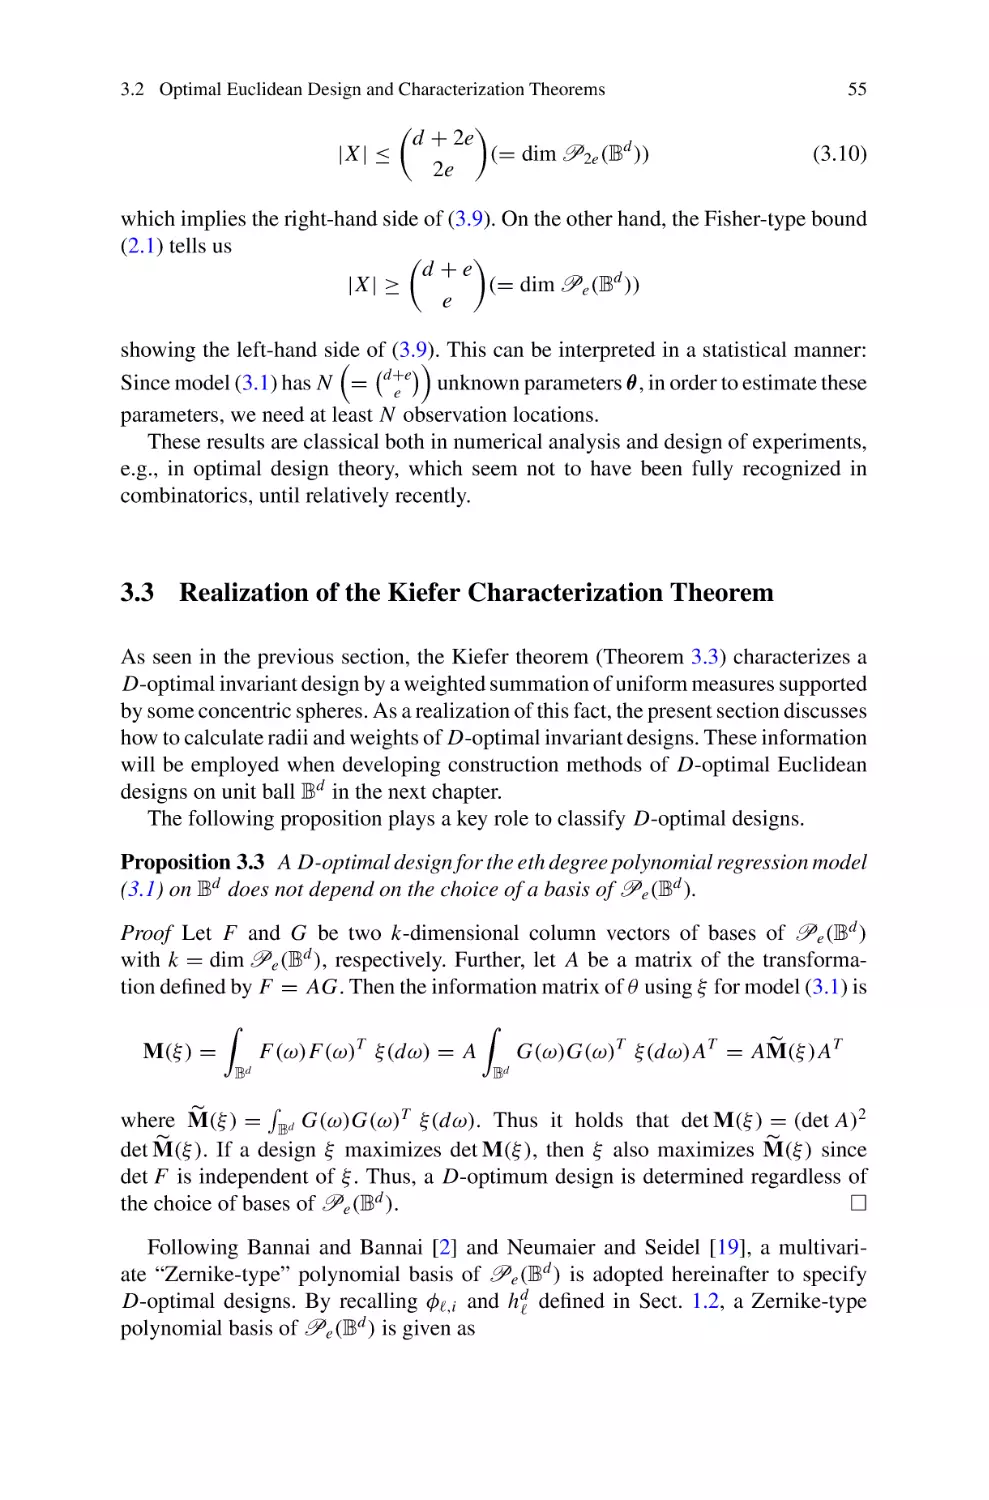 3.3 Realization of the Kiefer Characterization Theorem